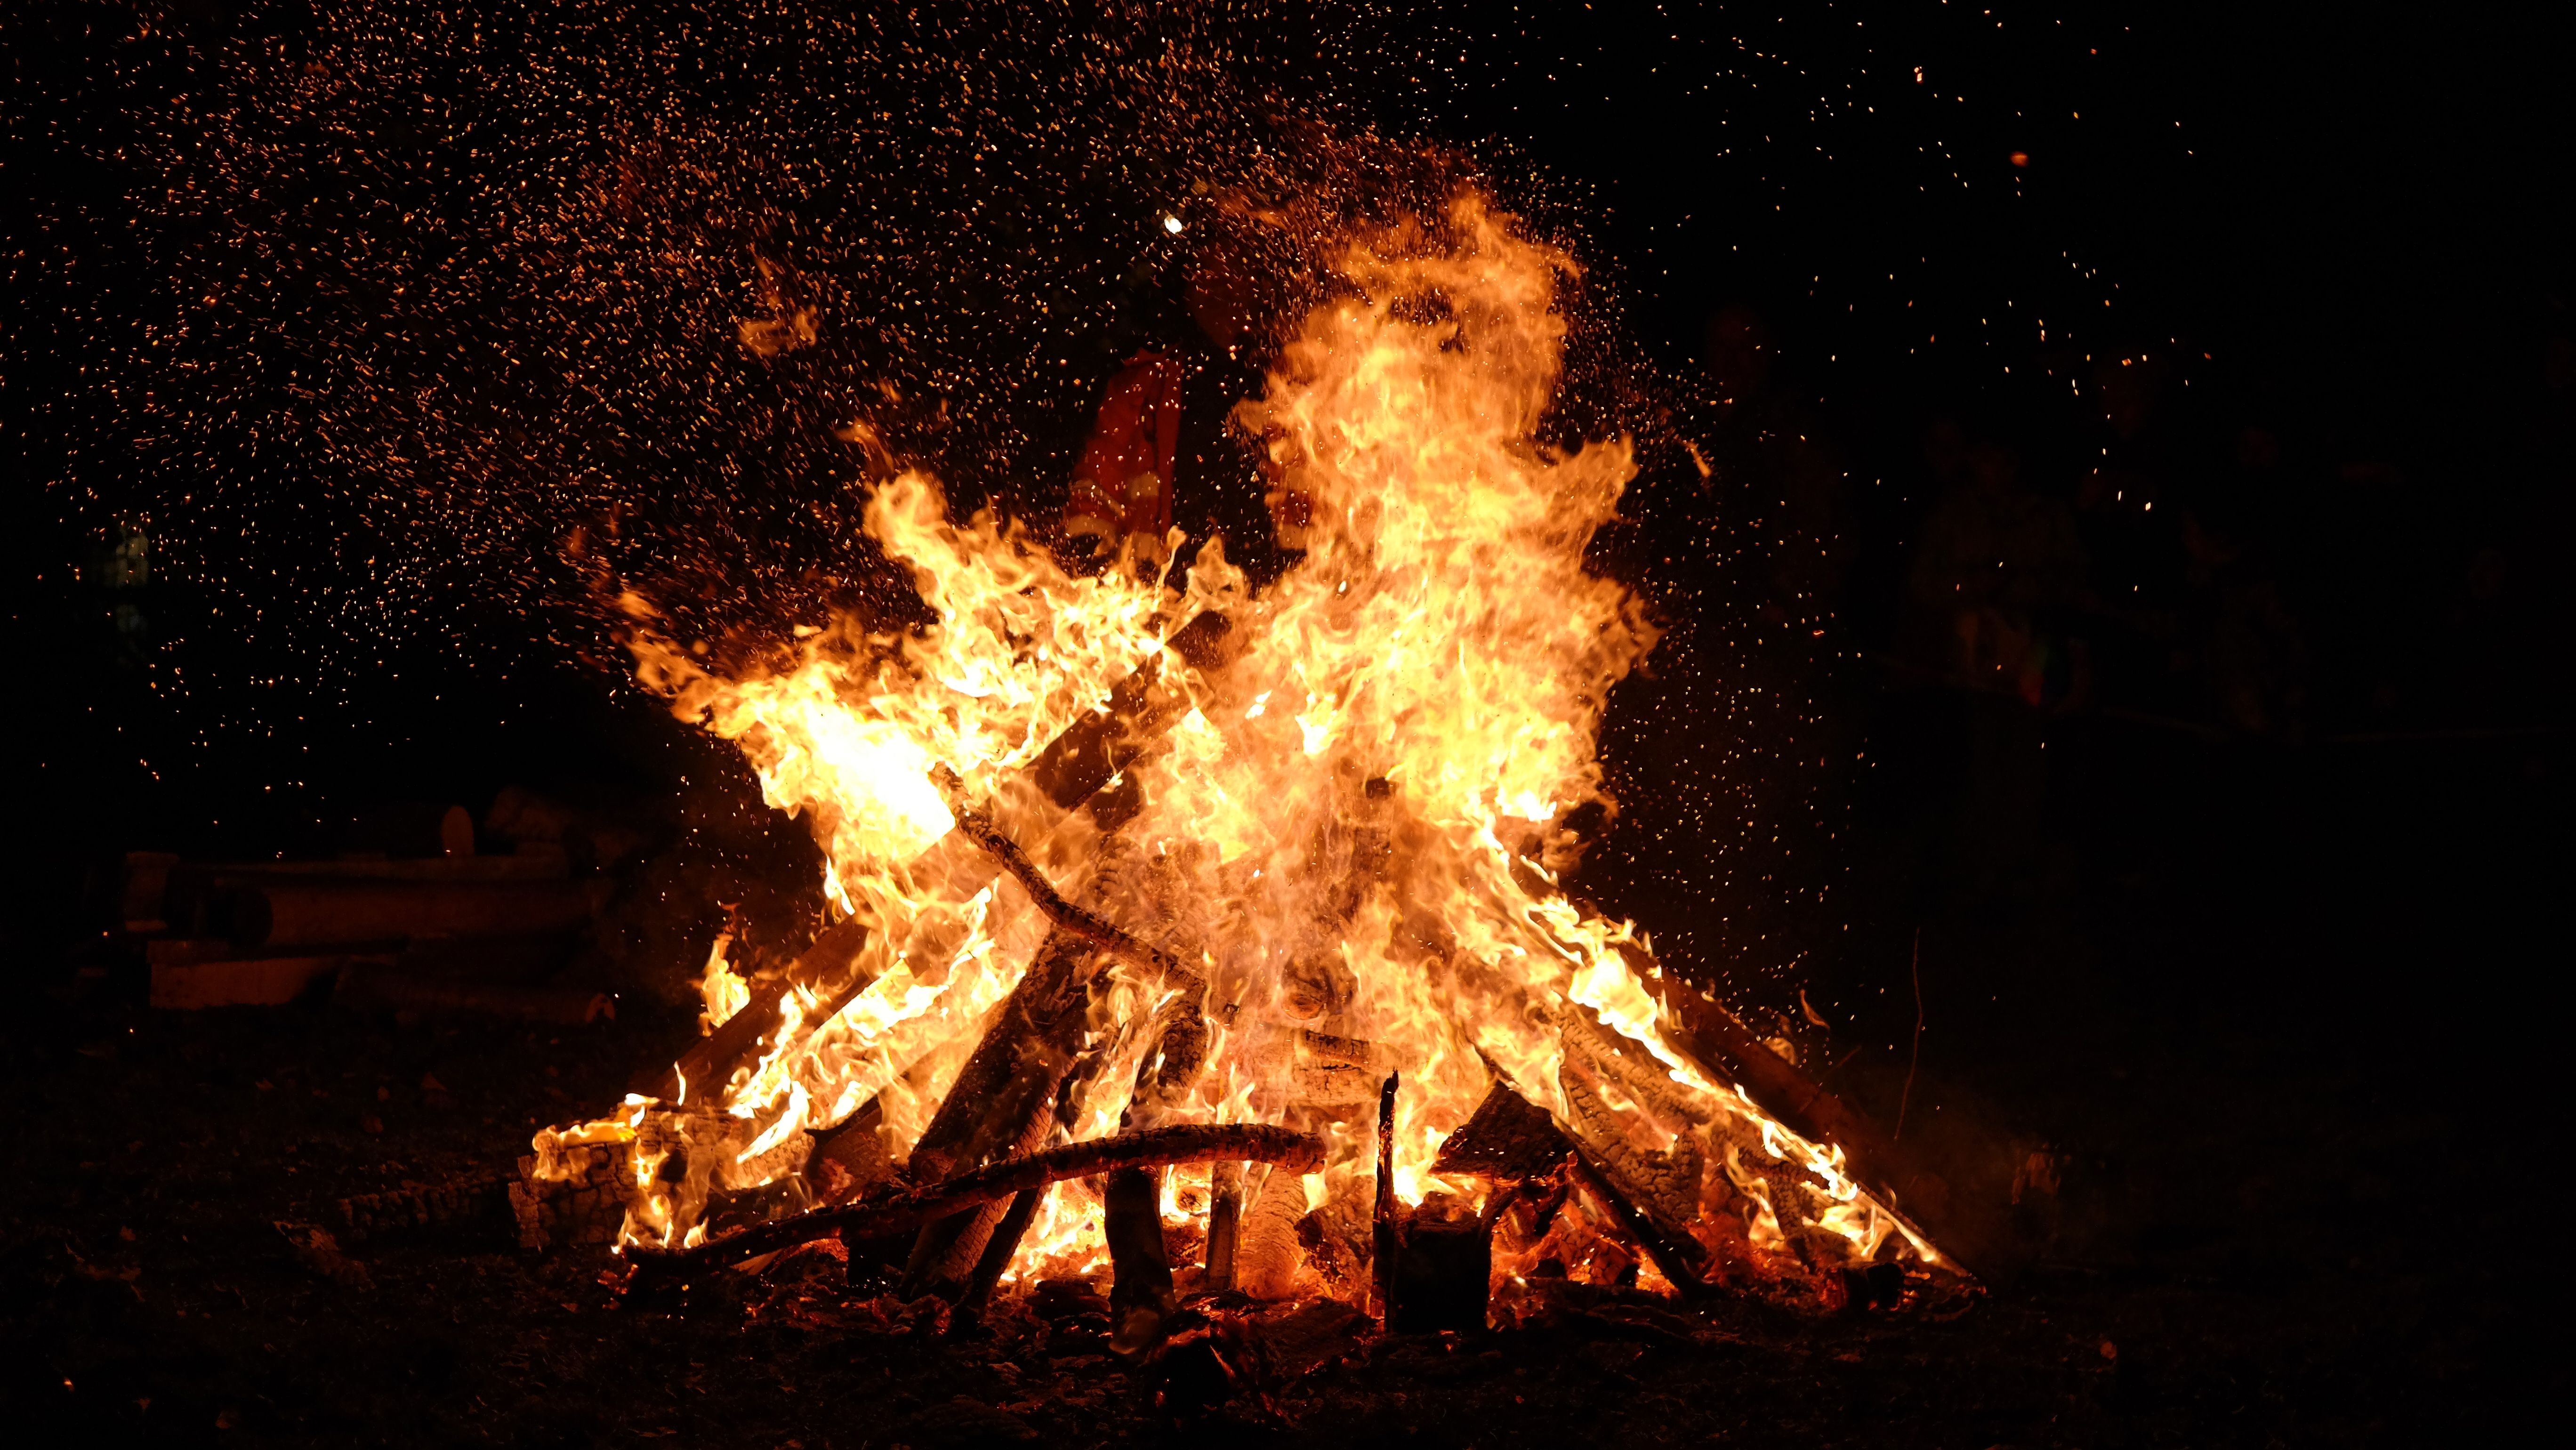 Bonfire, HD Nature, 4k Wallpaper, Image, Background, Photo